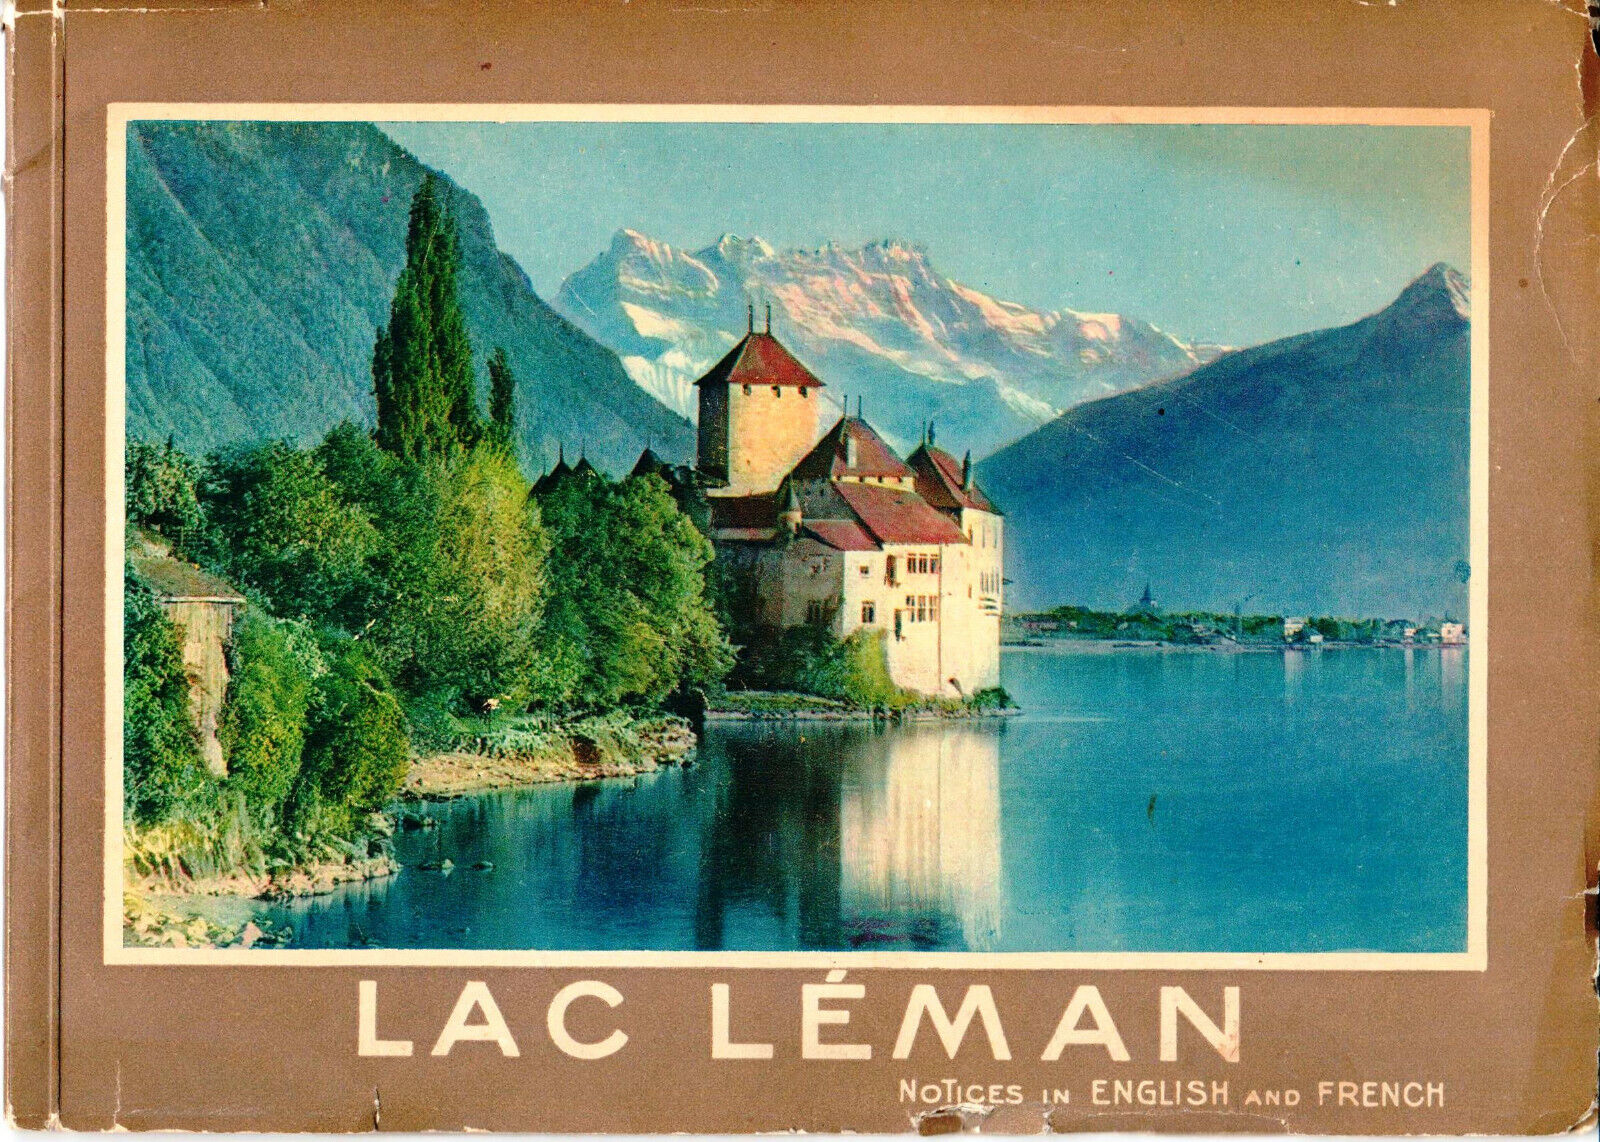 Switzerland, 1930's, Vintage Illustrated Guide / Postcards - Lac Leman (16 Pg)